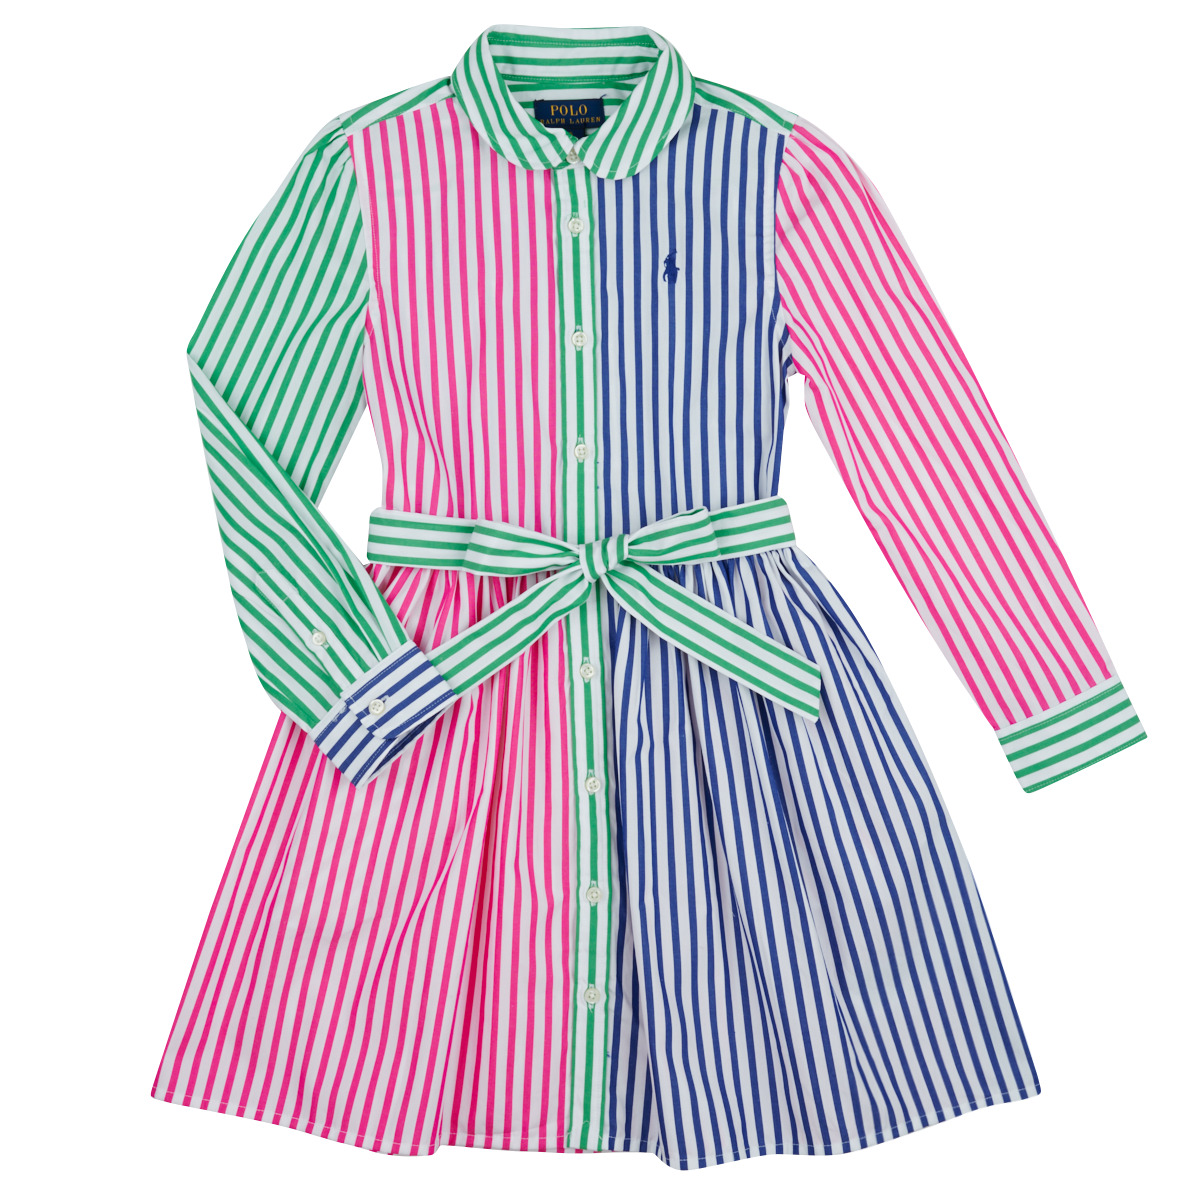 Textil Rapariga men pod Polo-shirts Kids clothing pens JNMLTFNSDRSS-DRESSES-DAY DRESS Multicolor